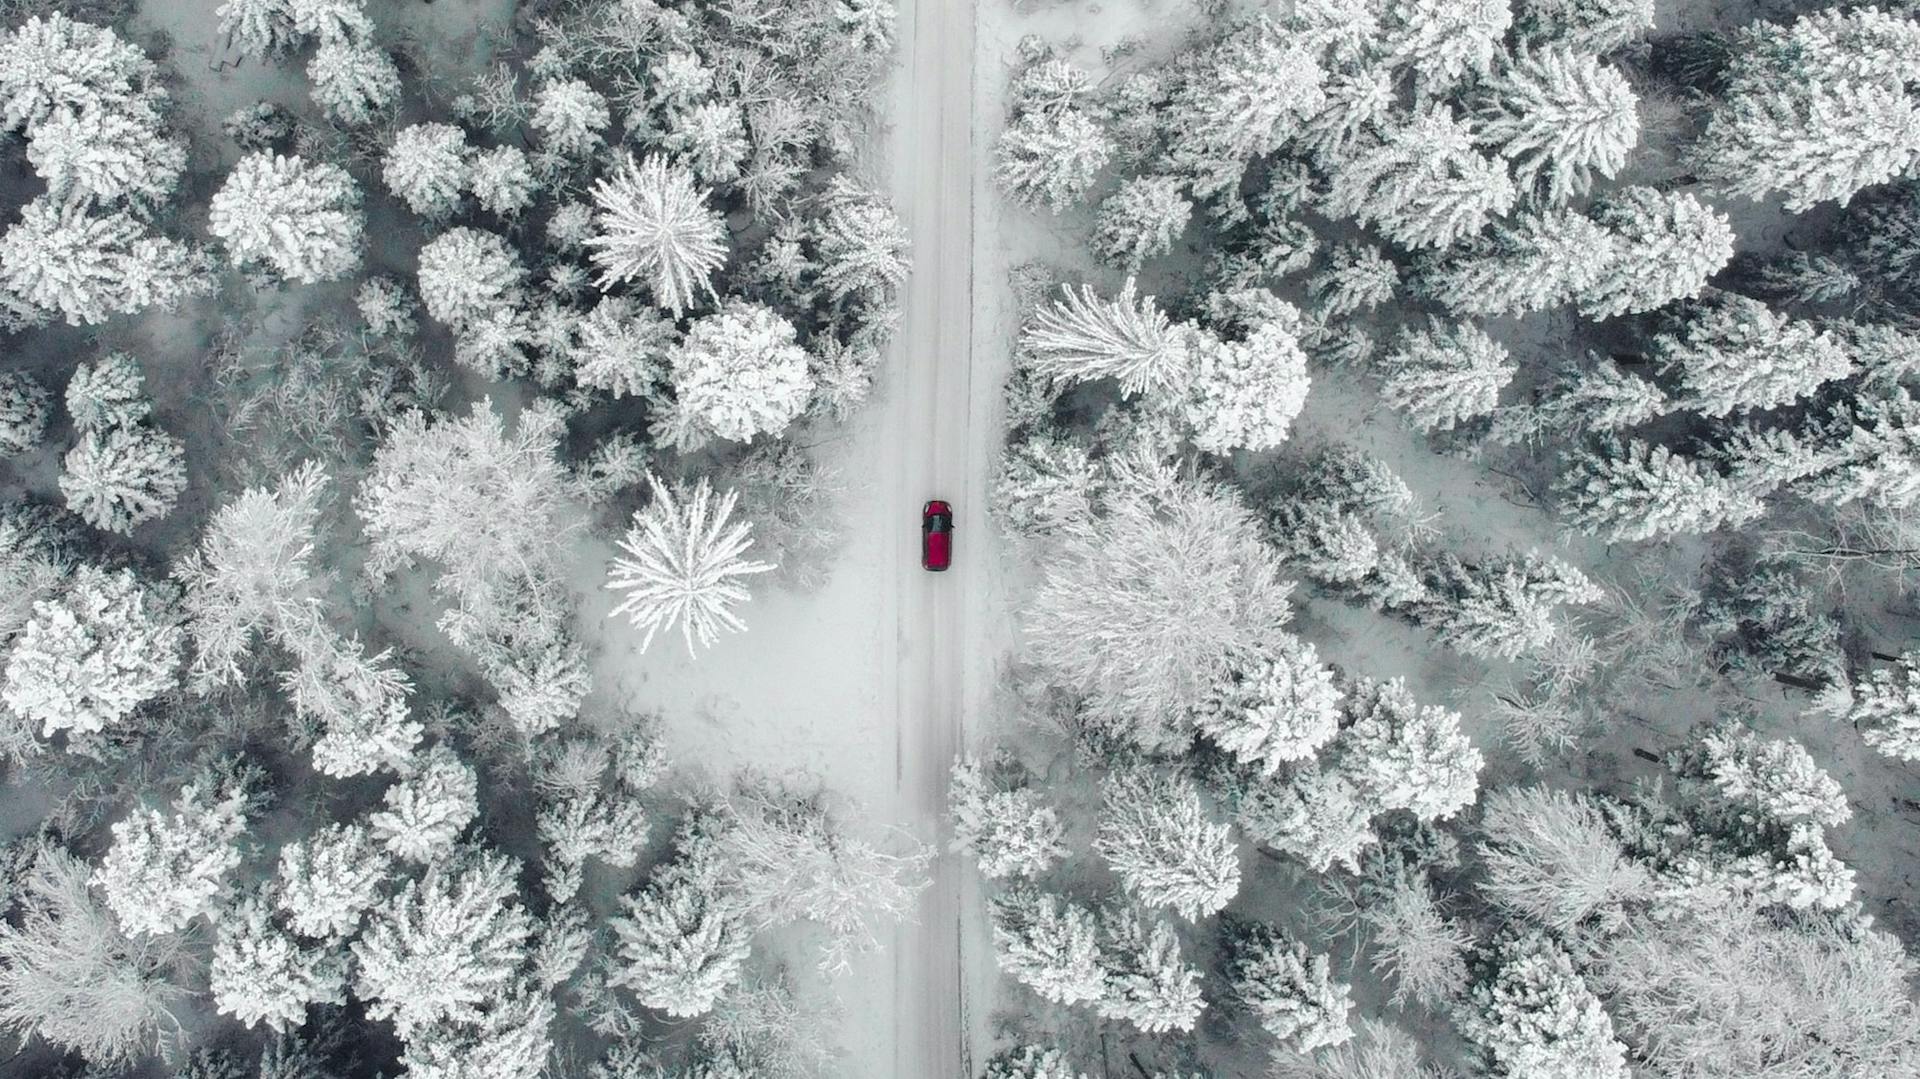 Car-Winter-Landscape-16:9